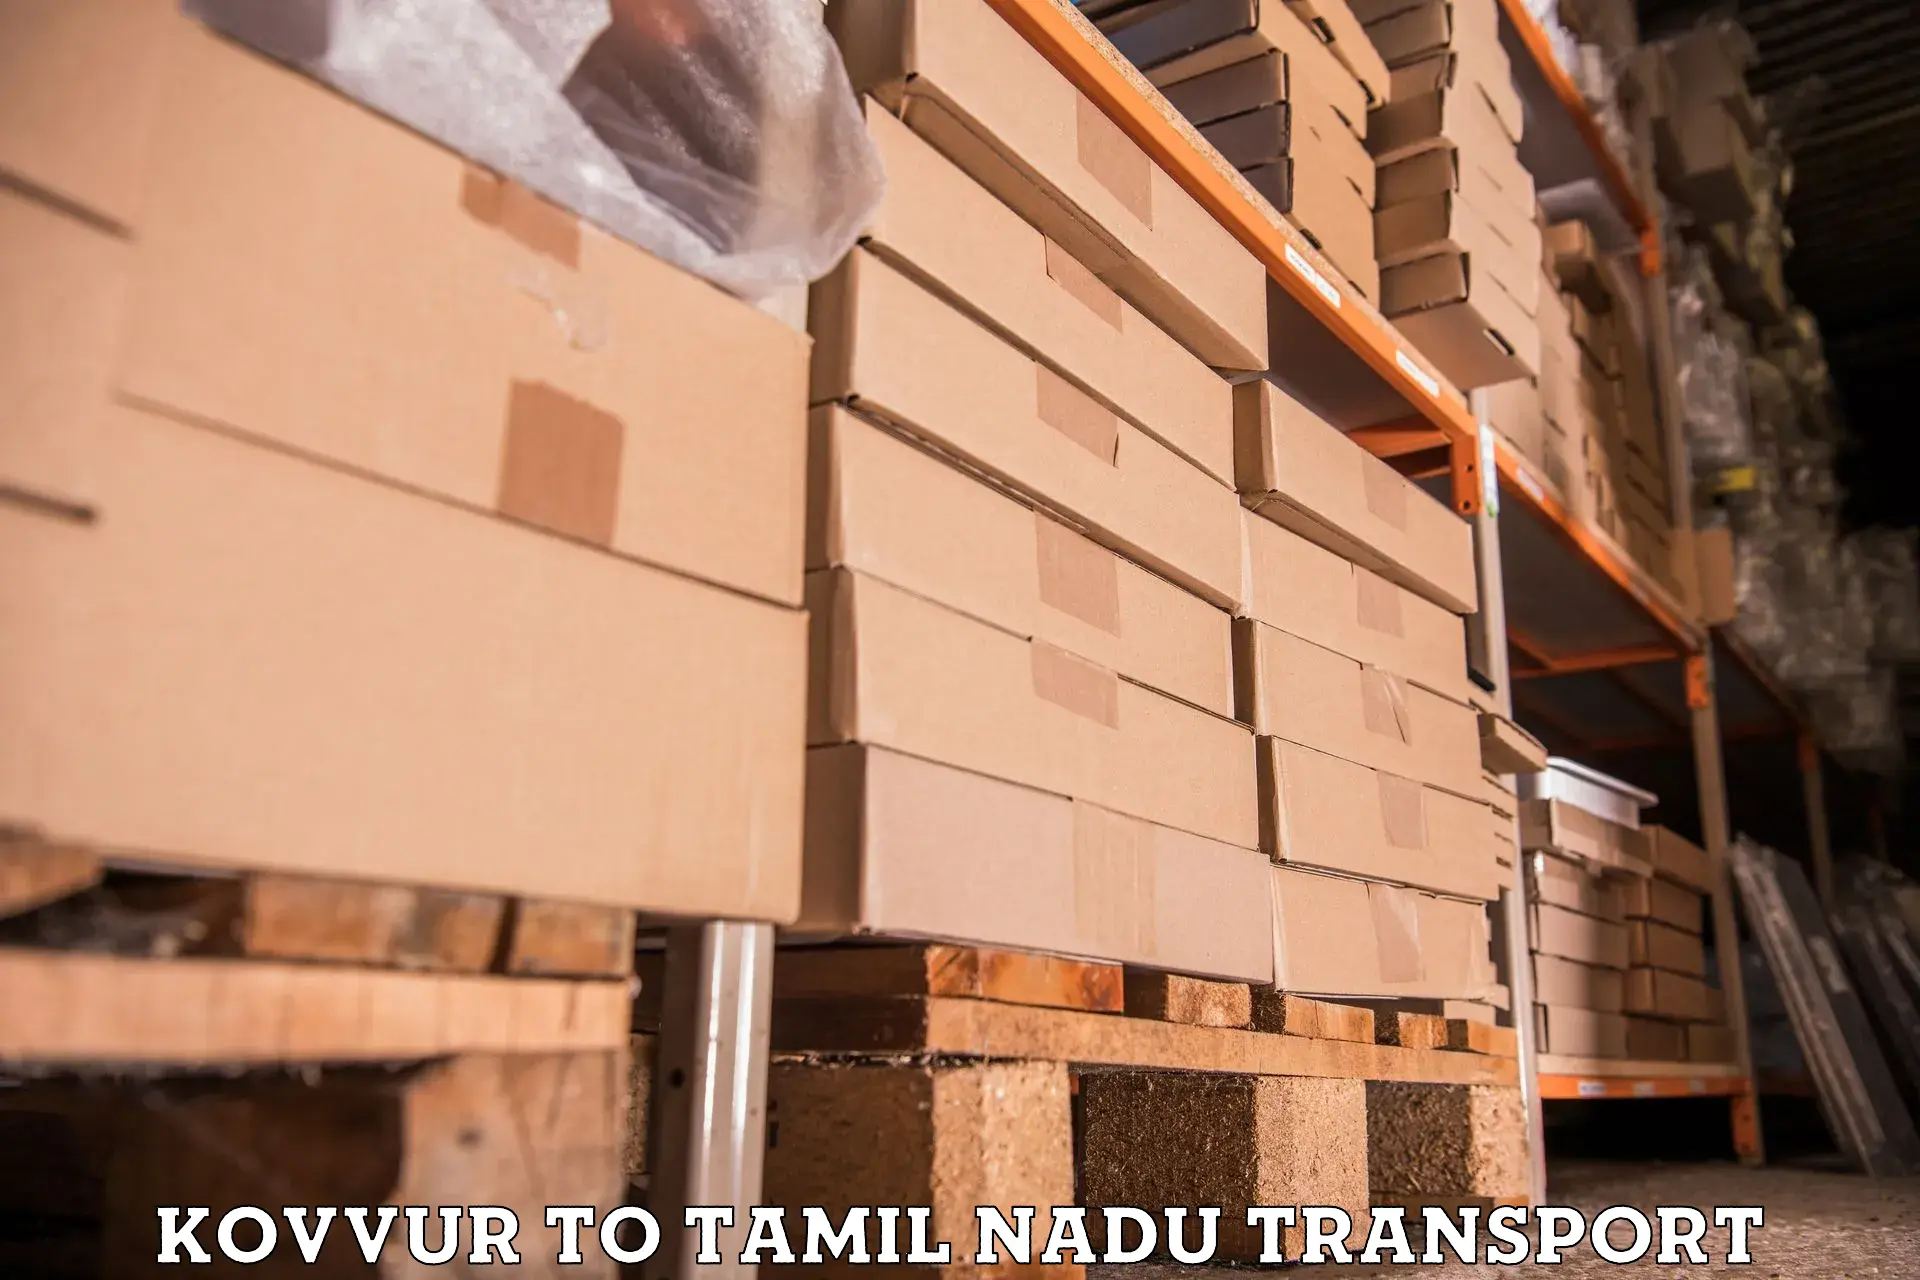 Truck transport companies in India in Kovvur to Perambalur